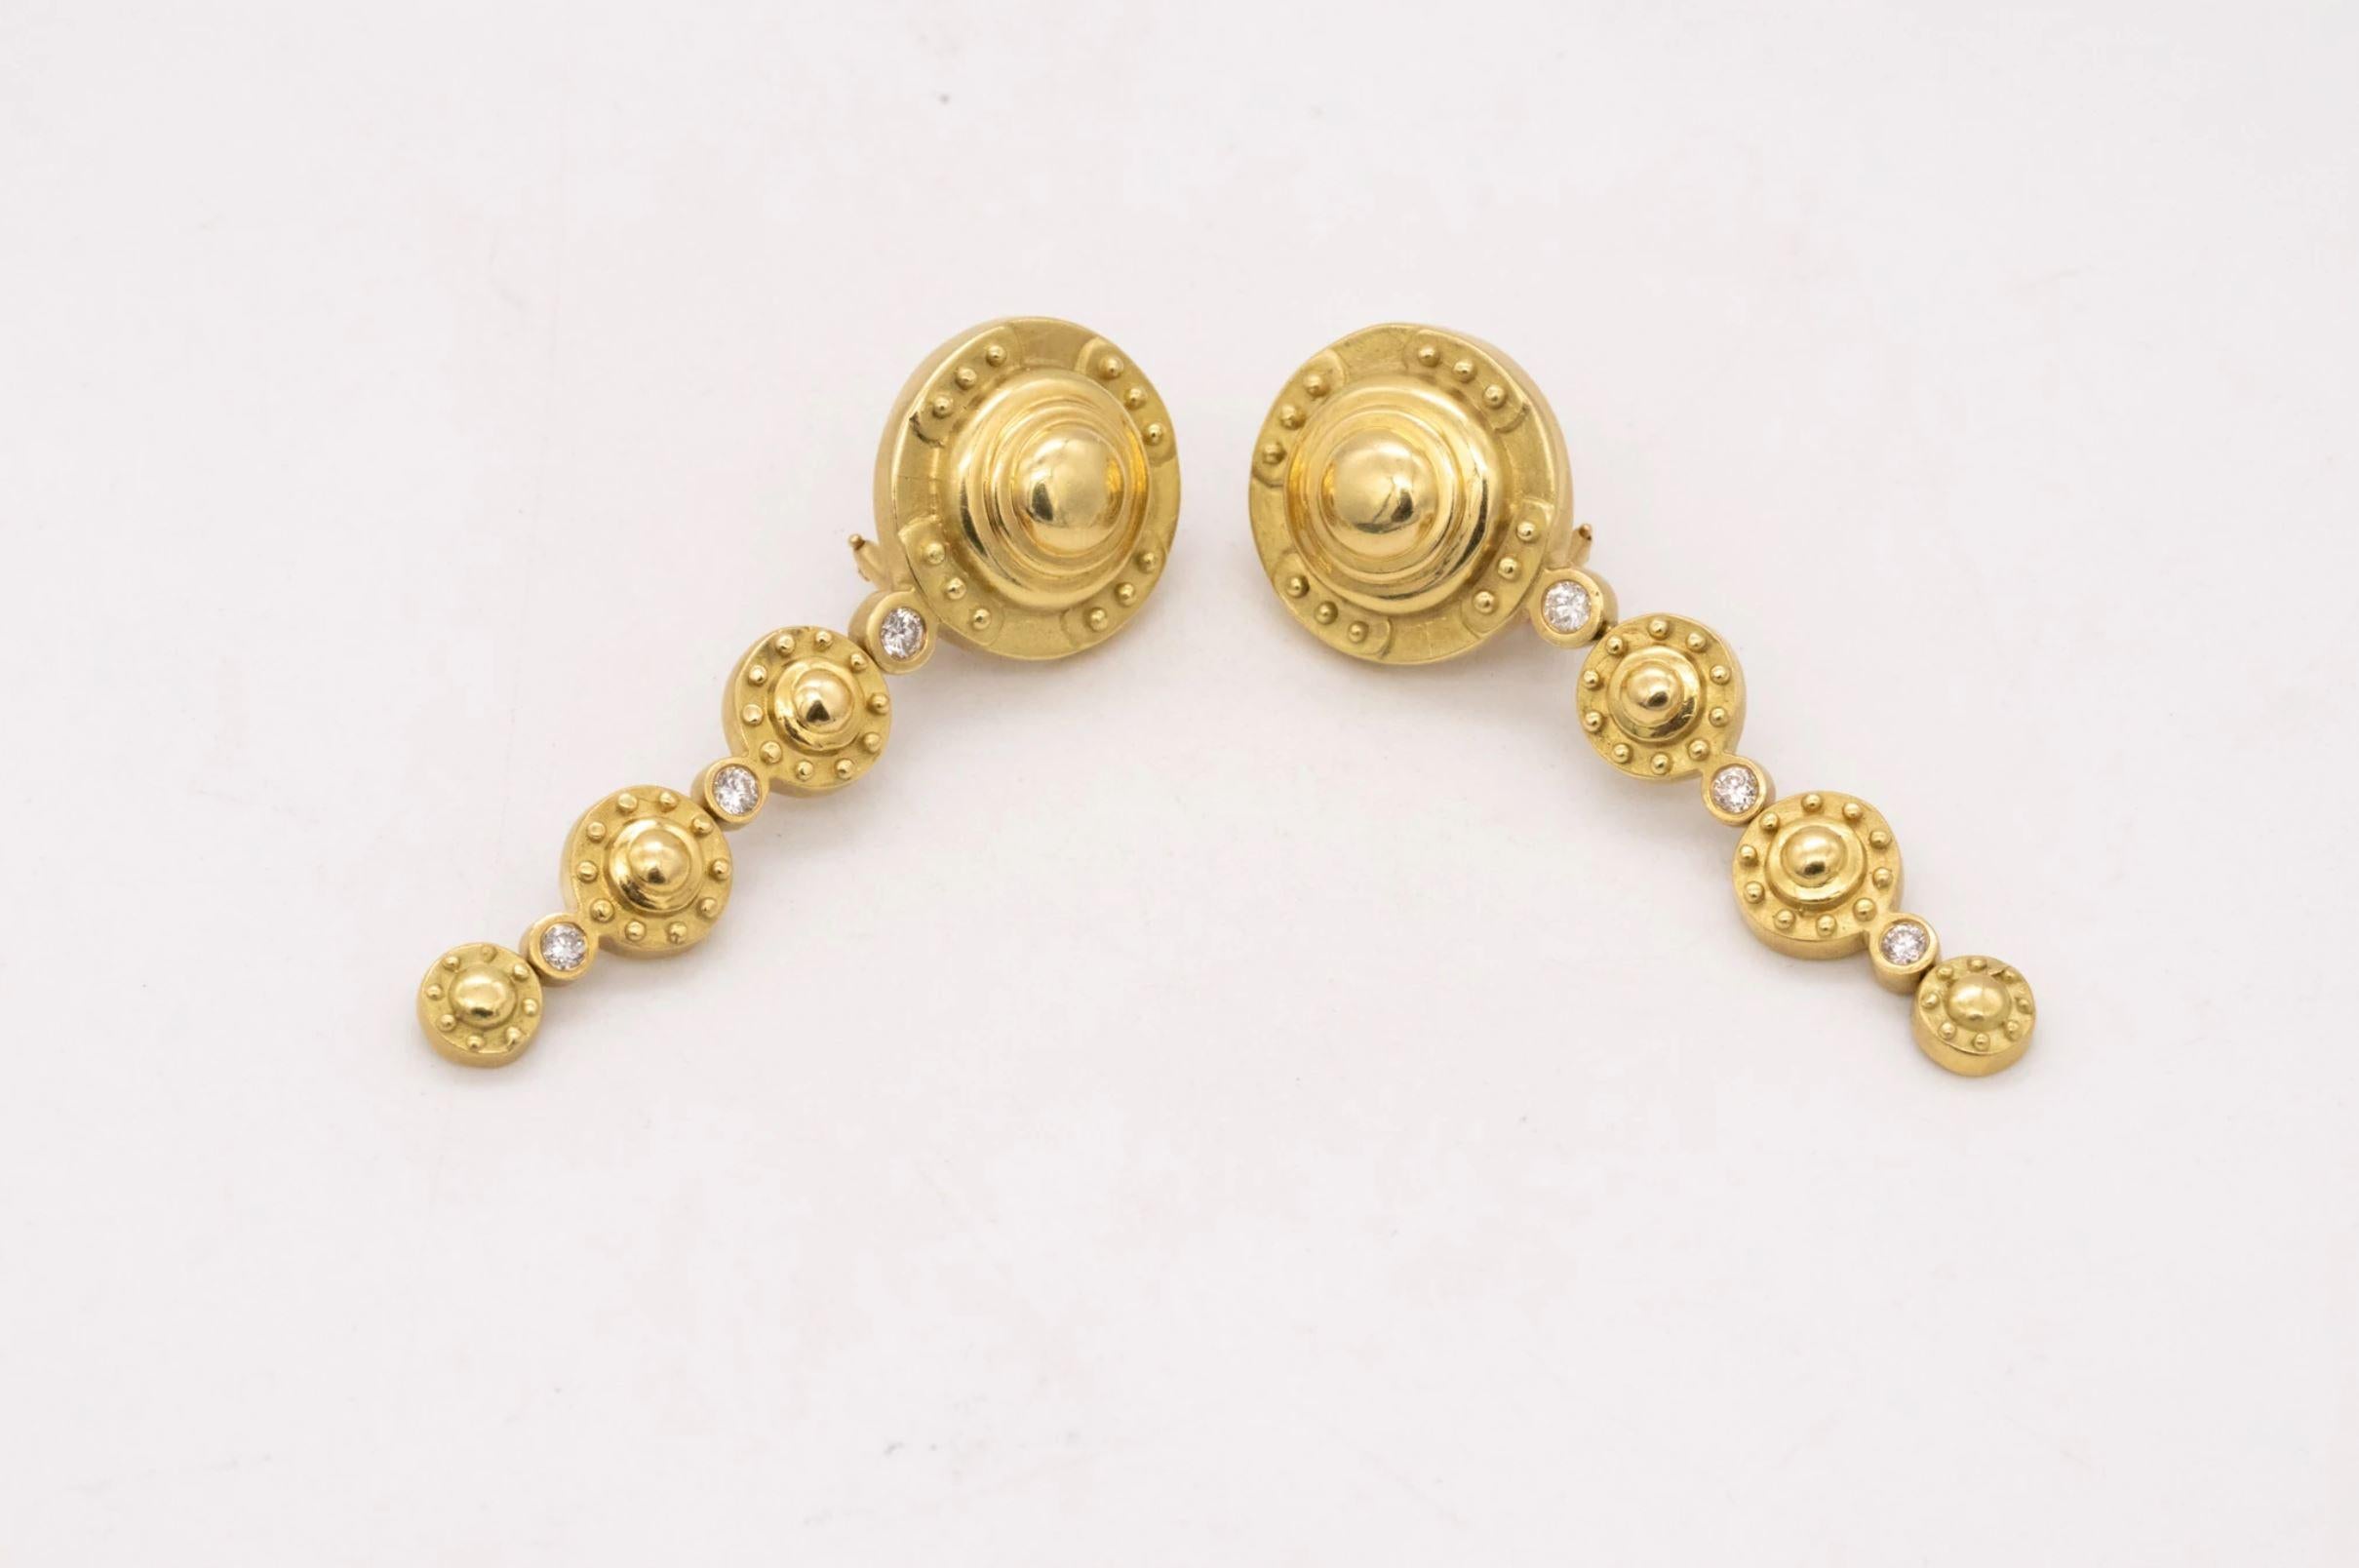 etruscan jewelry